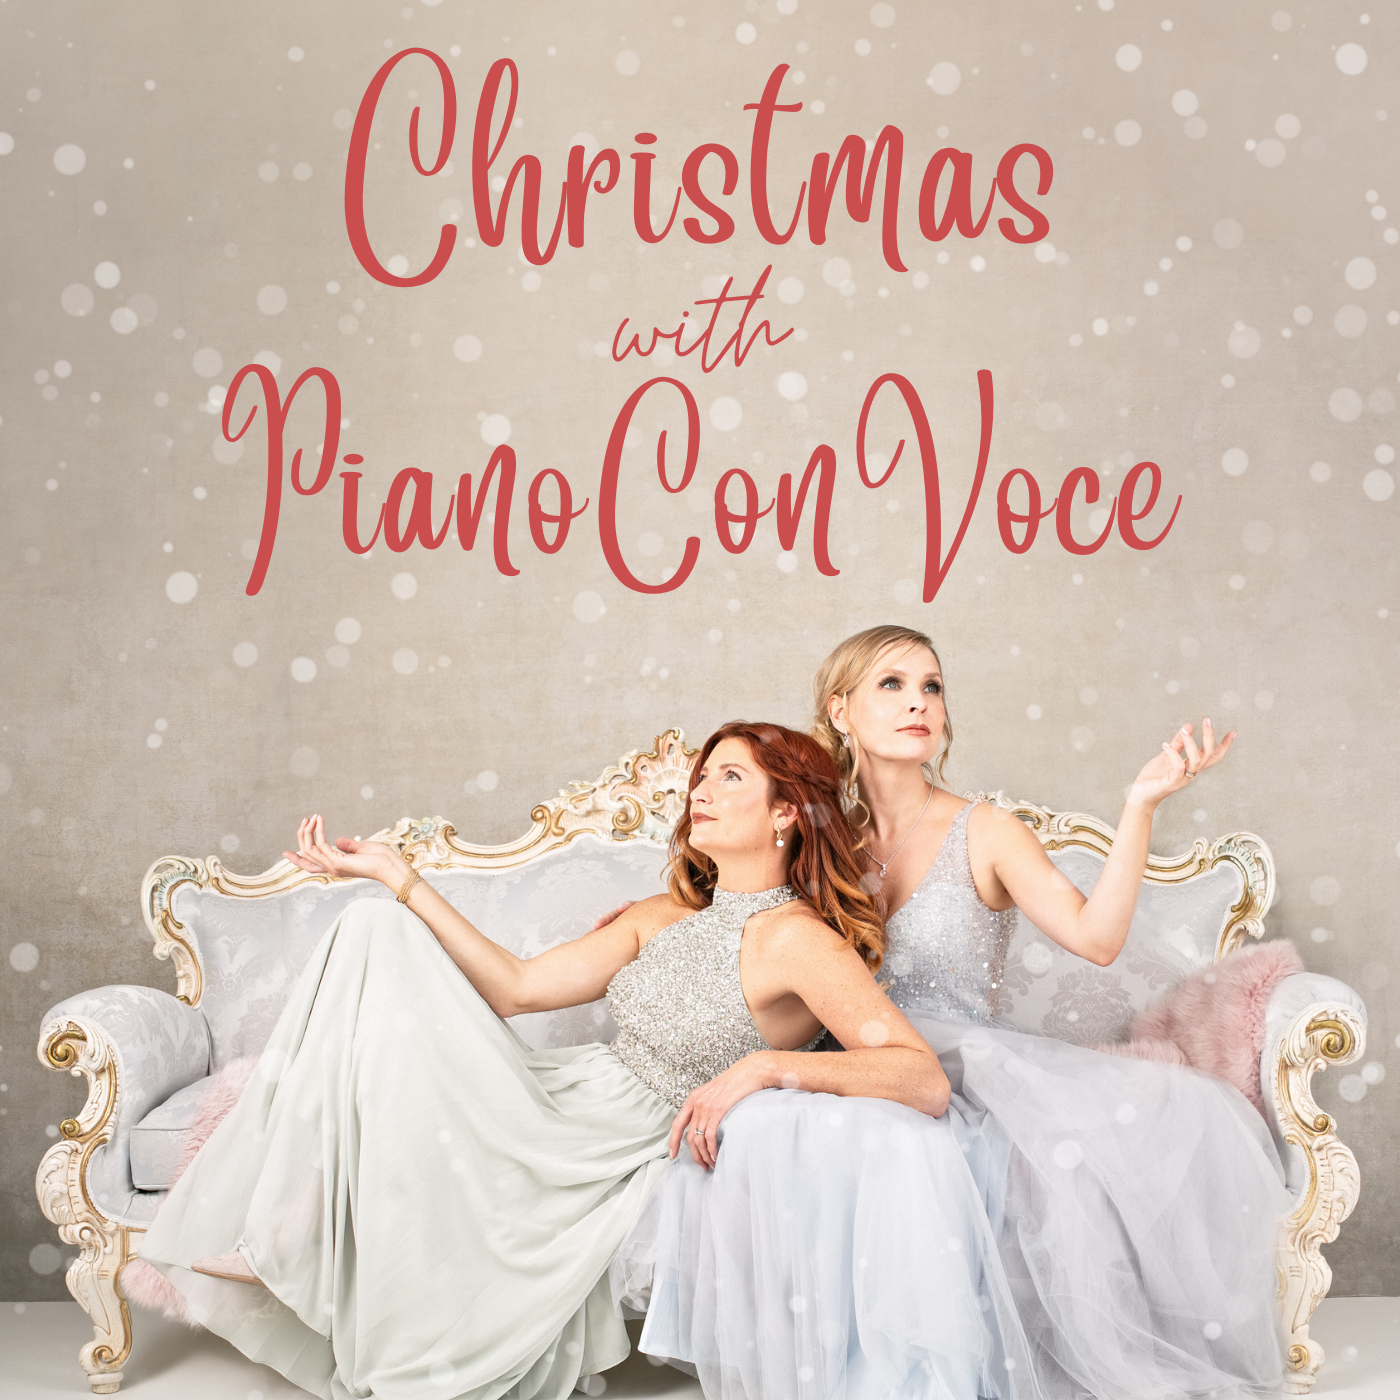 Christmas with PianoConVoce Bulk Price